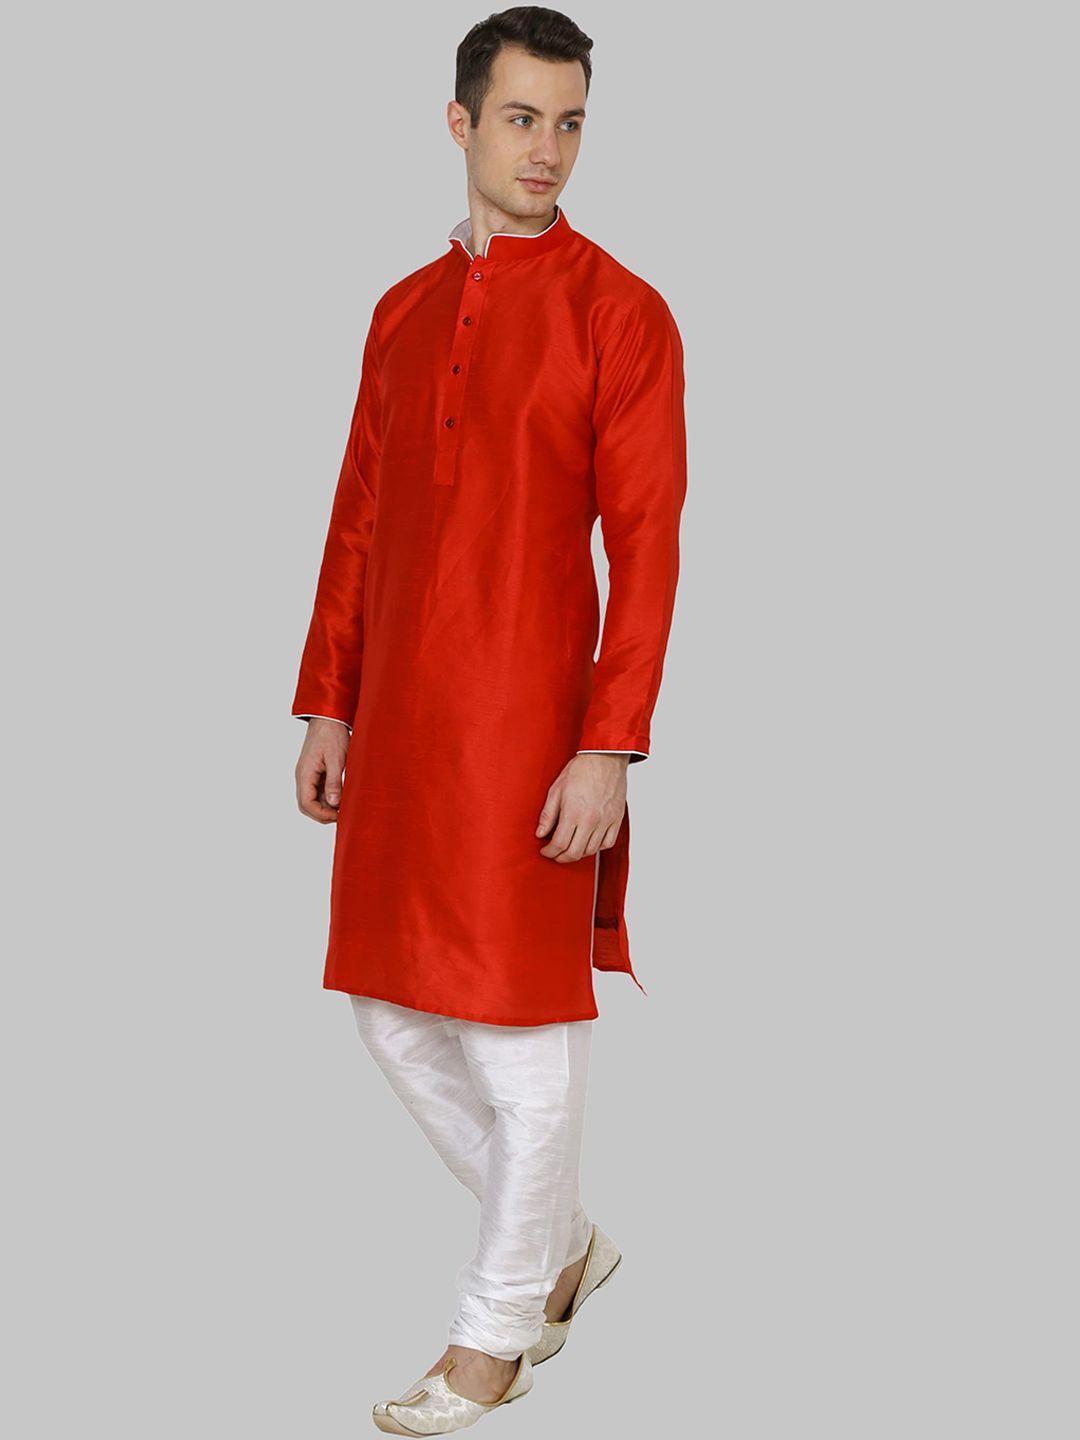 royal kurta men red and off white solid mandarin collar dupion silk kurta with churidar